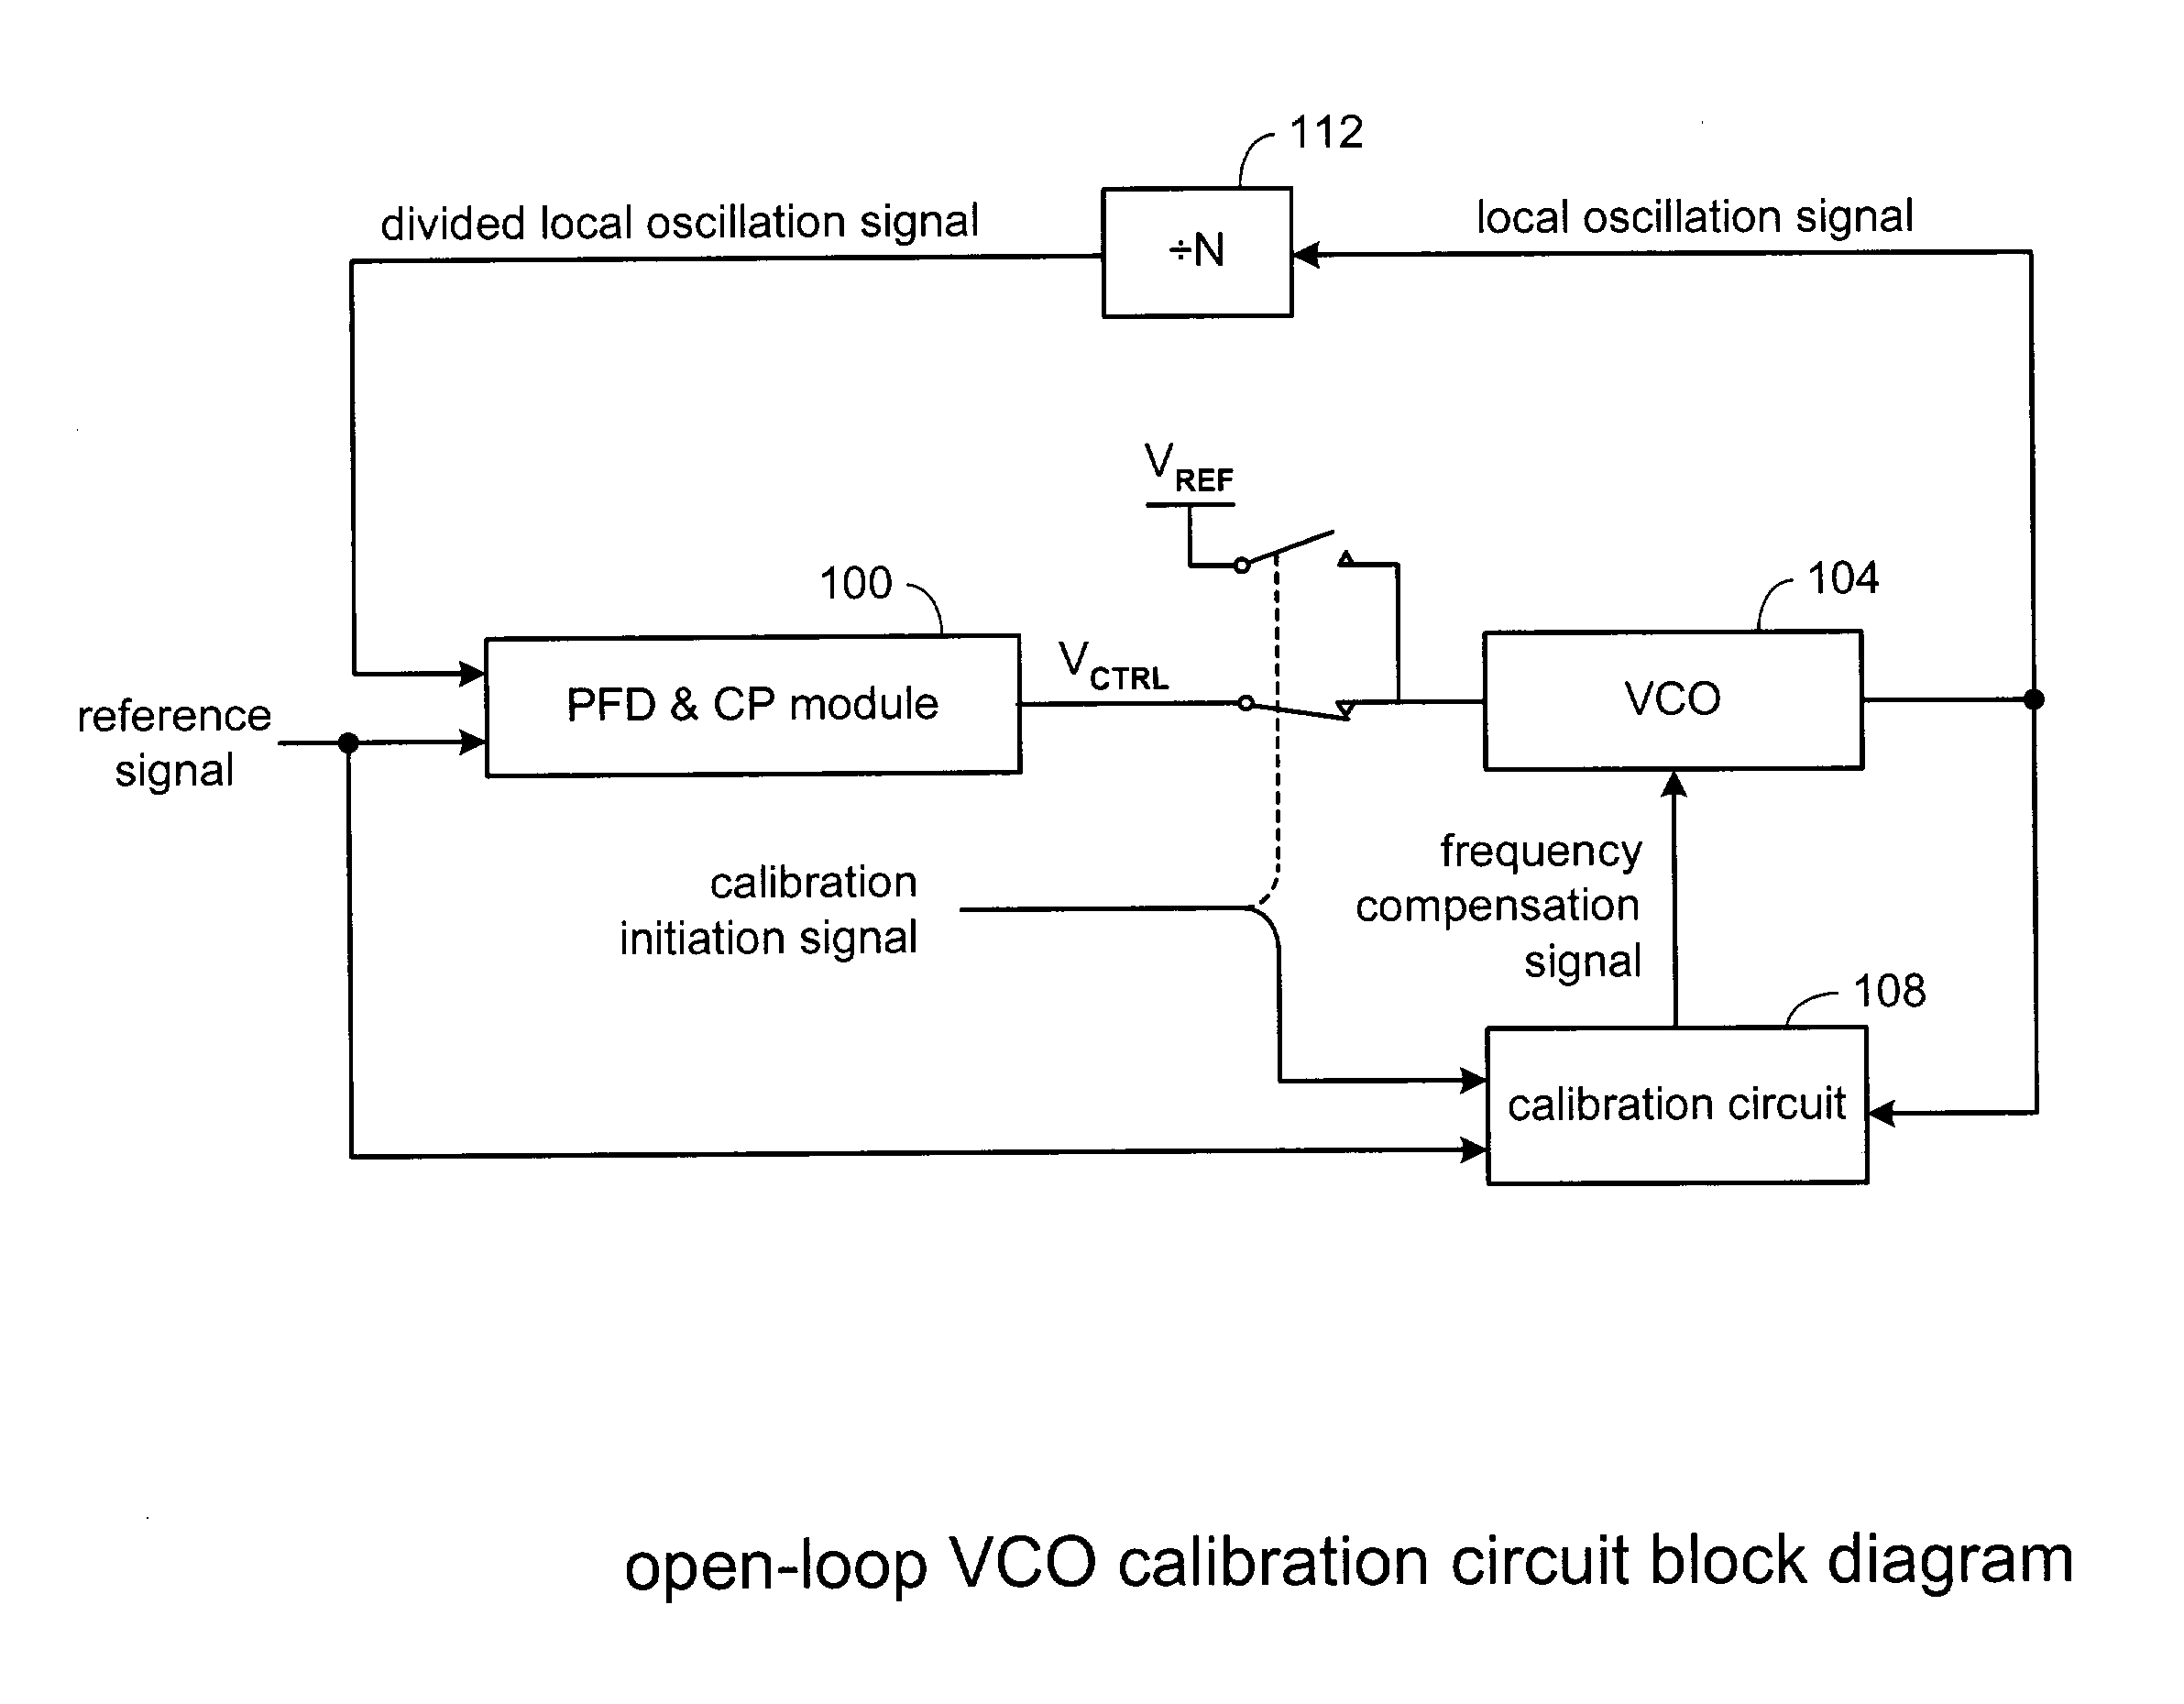 Analog open-loop VCO calibration method